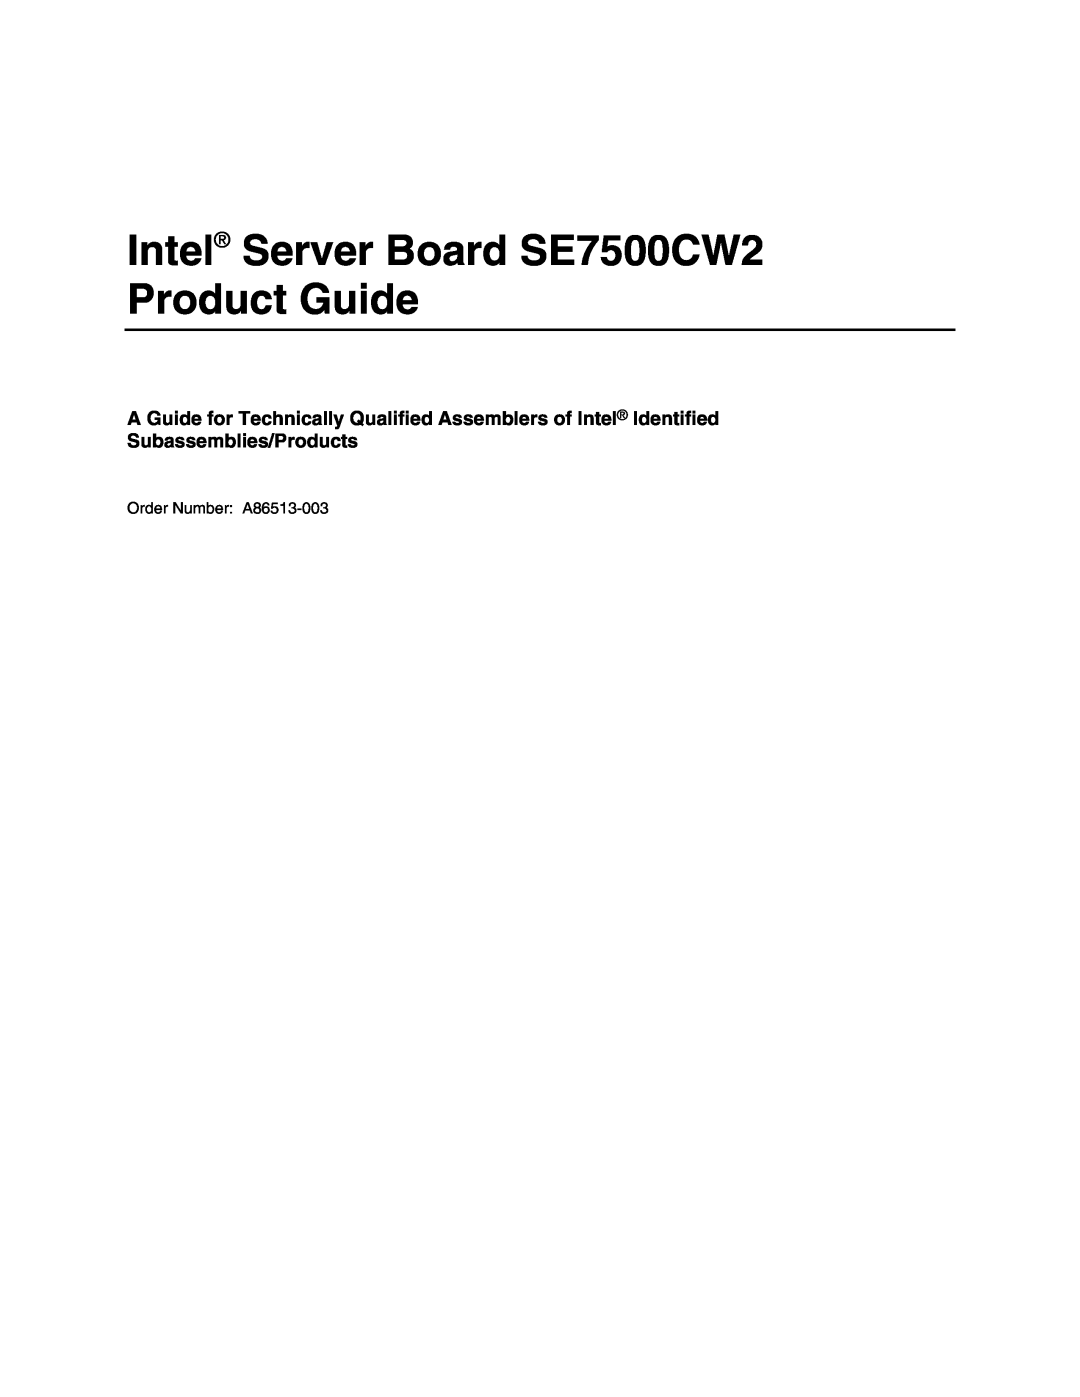 Intel manual Subassemblies/Products, Intel Server Board SE7500CW2 Product Guide 